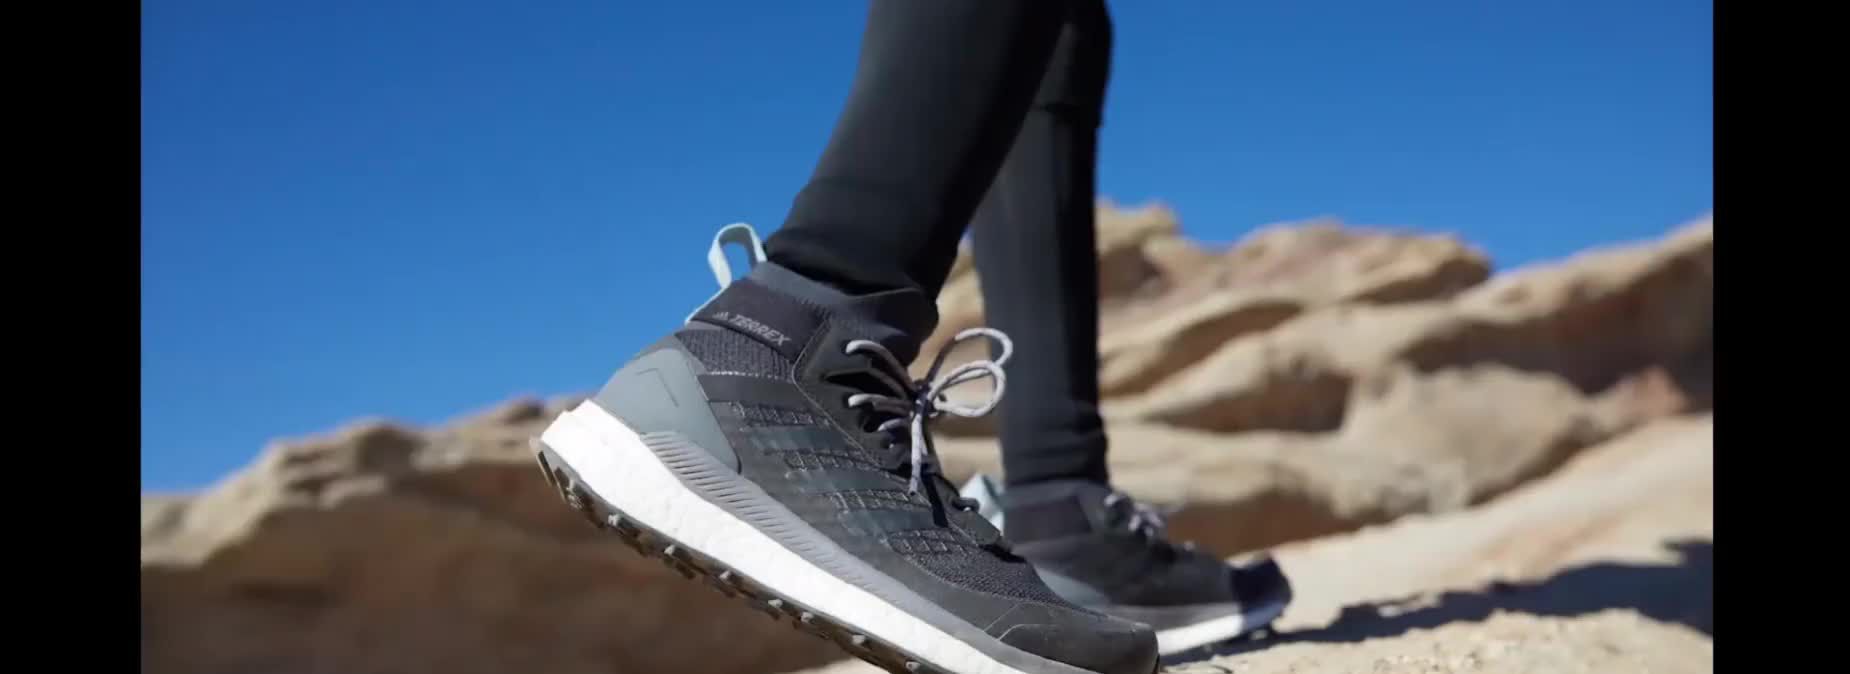 adidas terrex free hiker boot